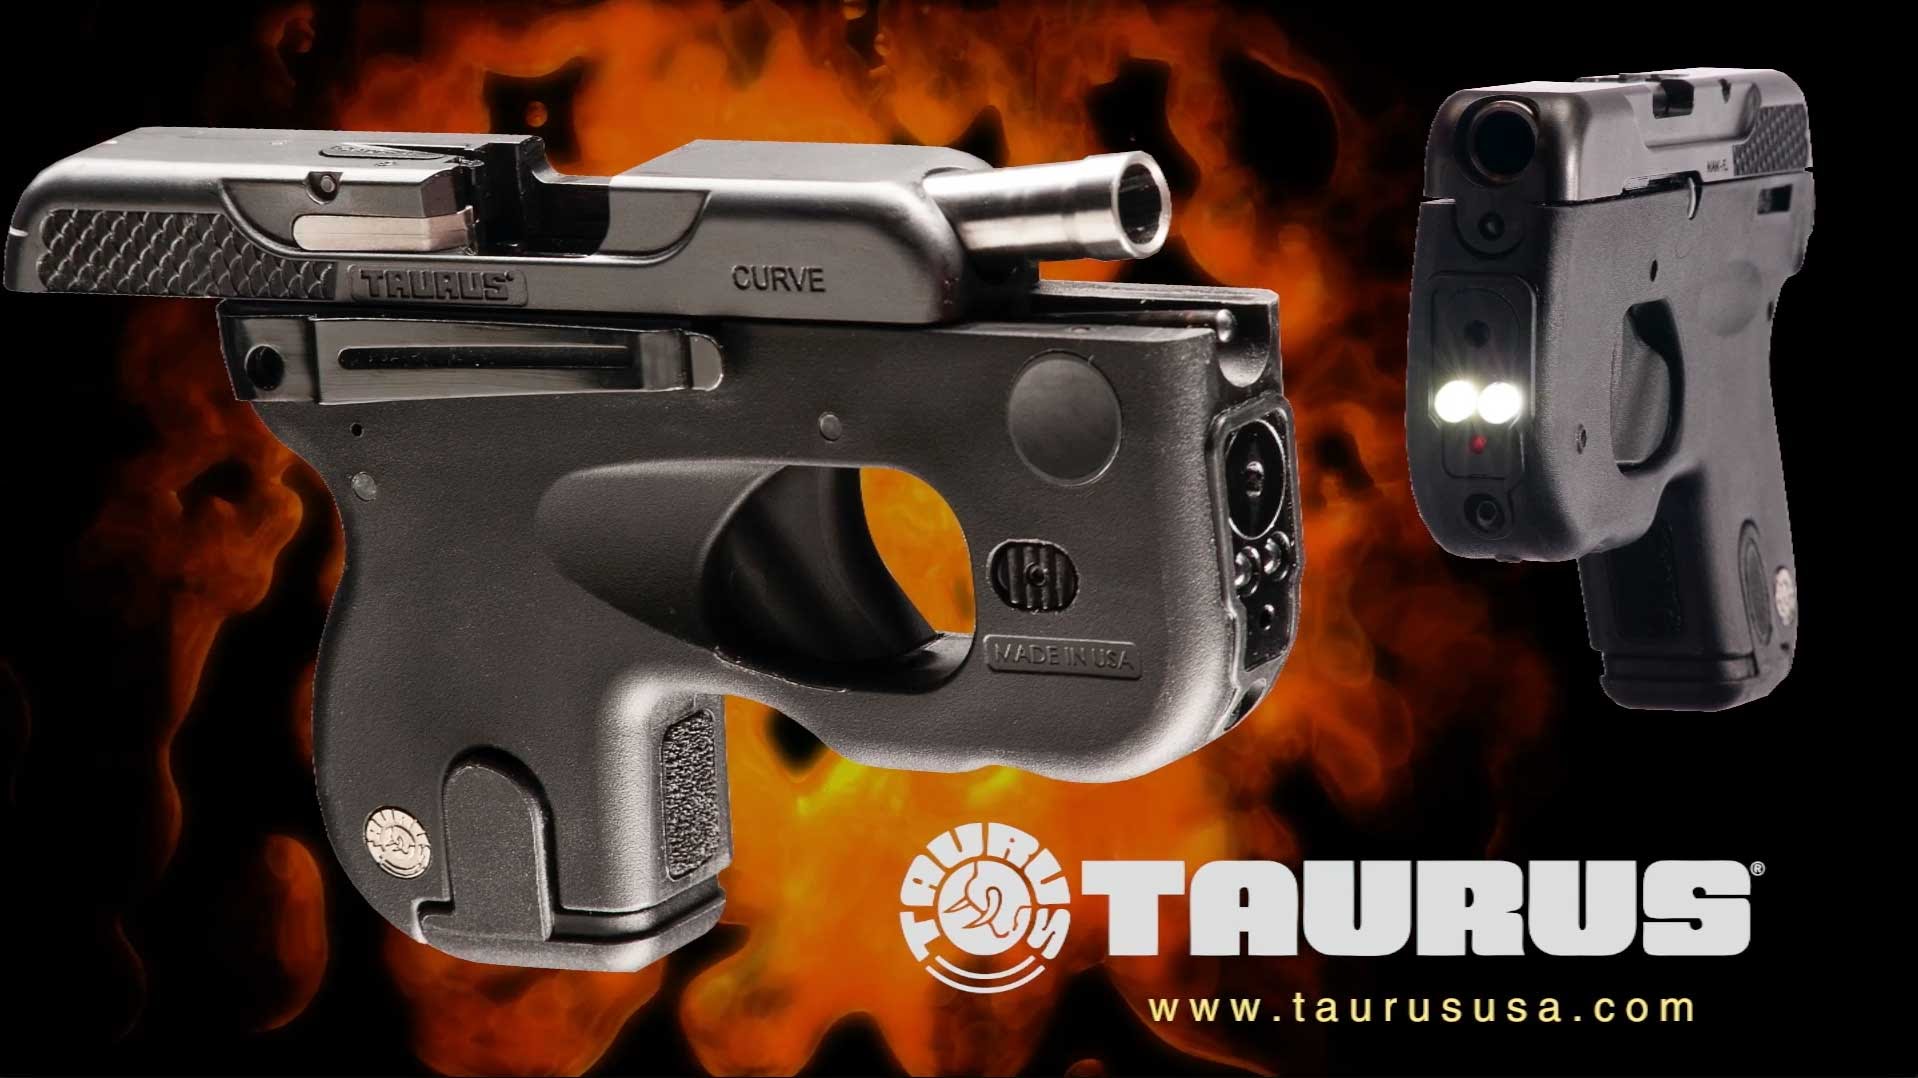 Taurus Curve: The Gun You Wear - YouTube